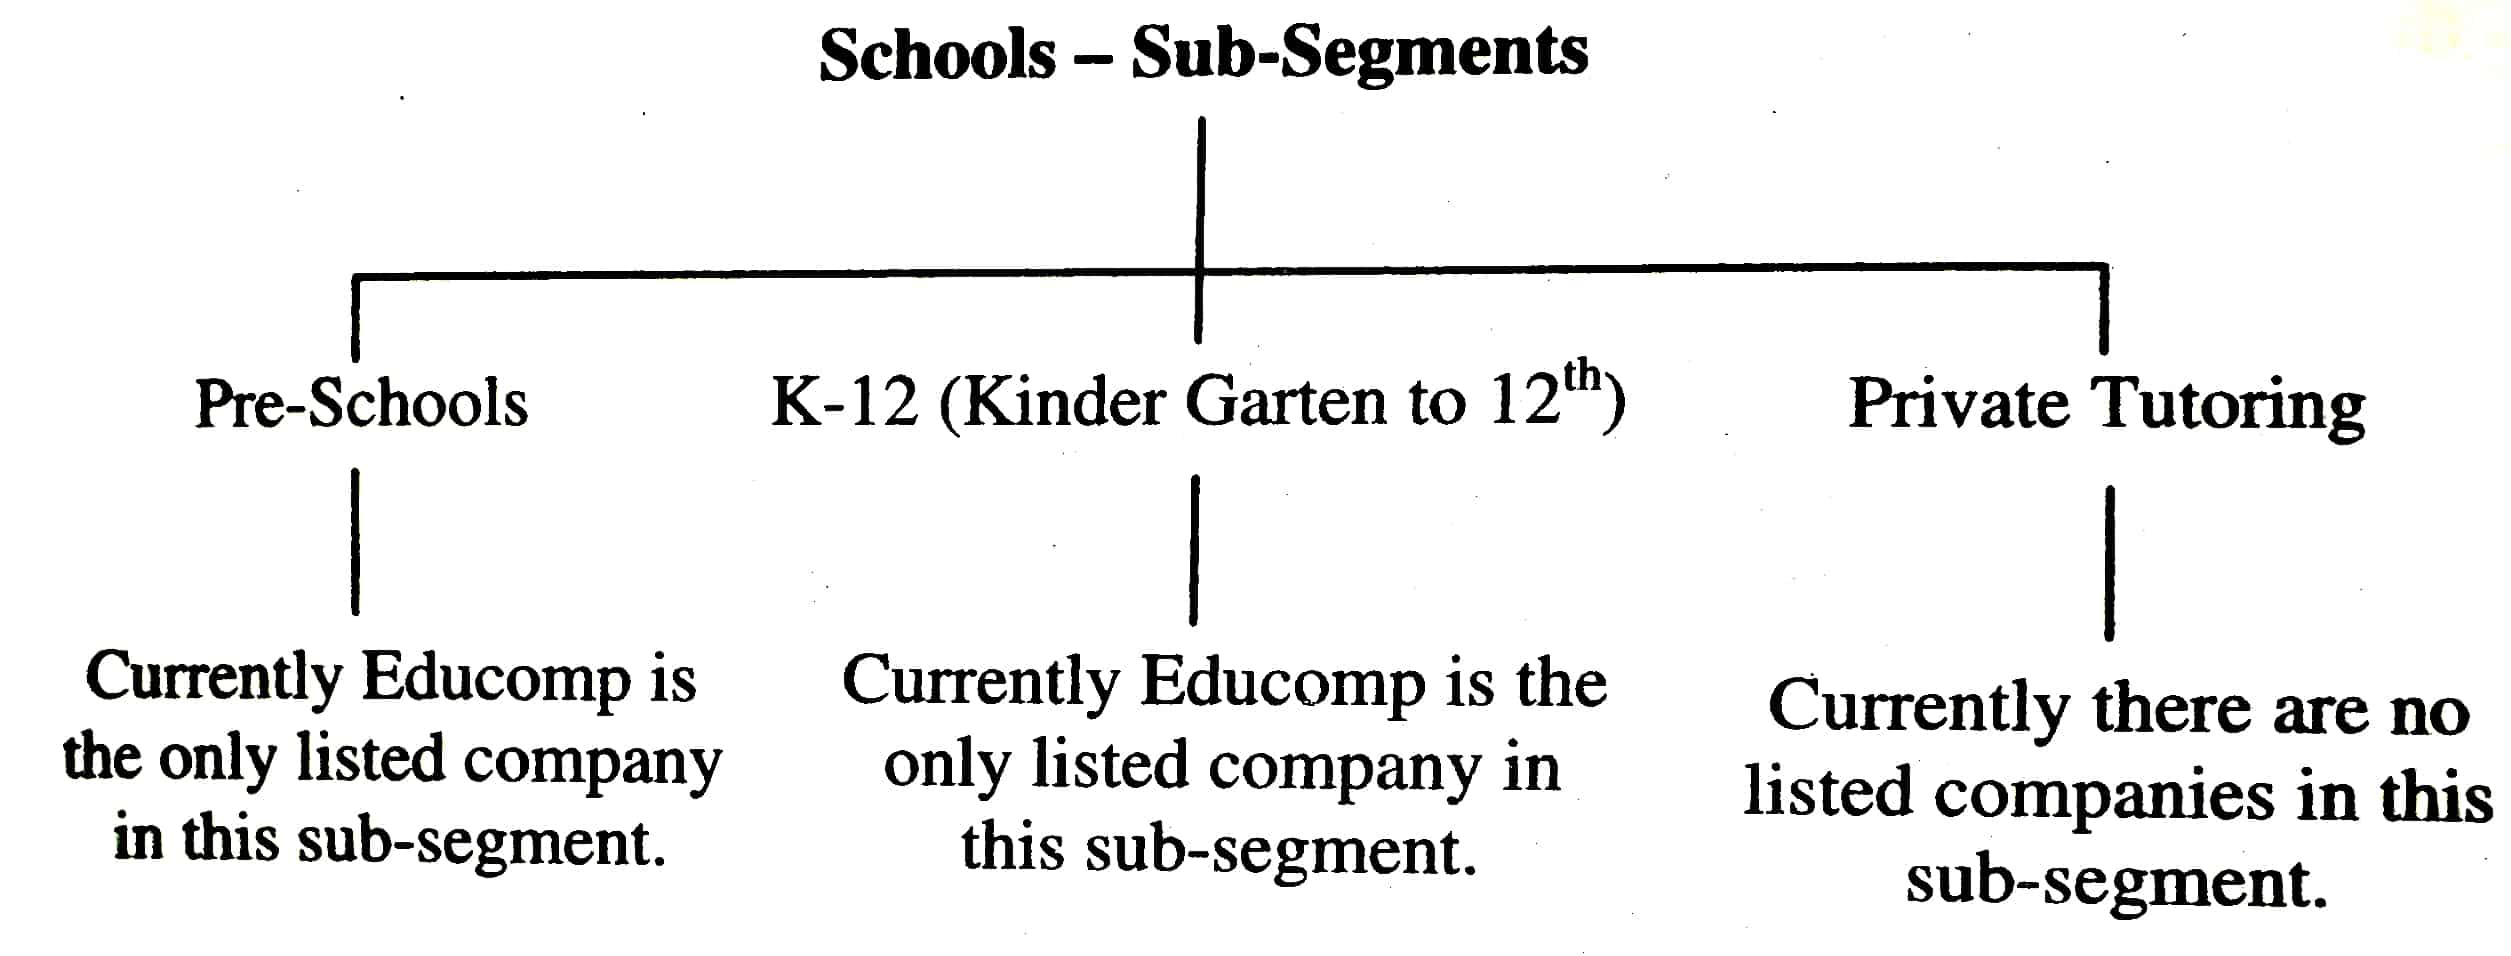 Segmentation of Schools